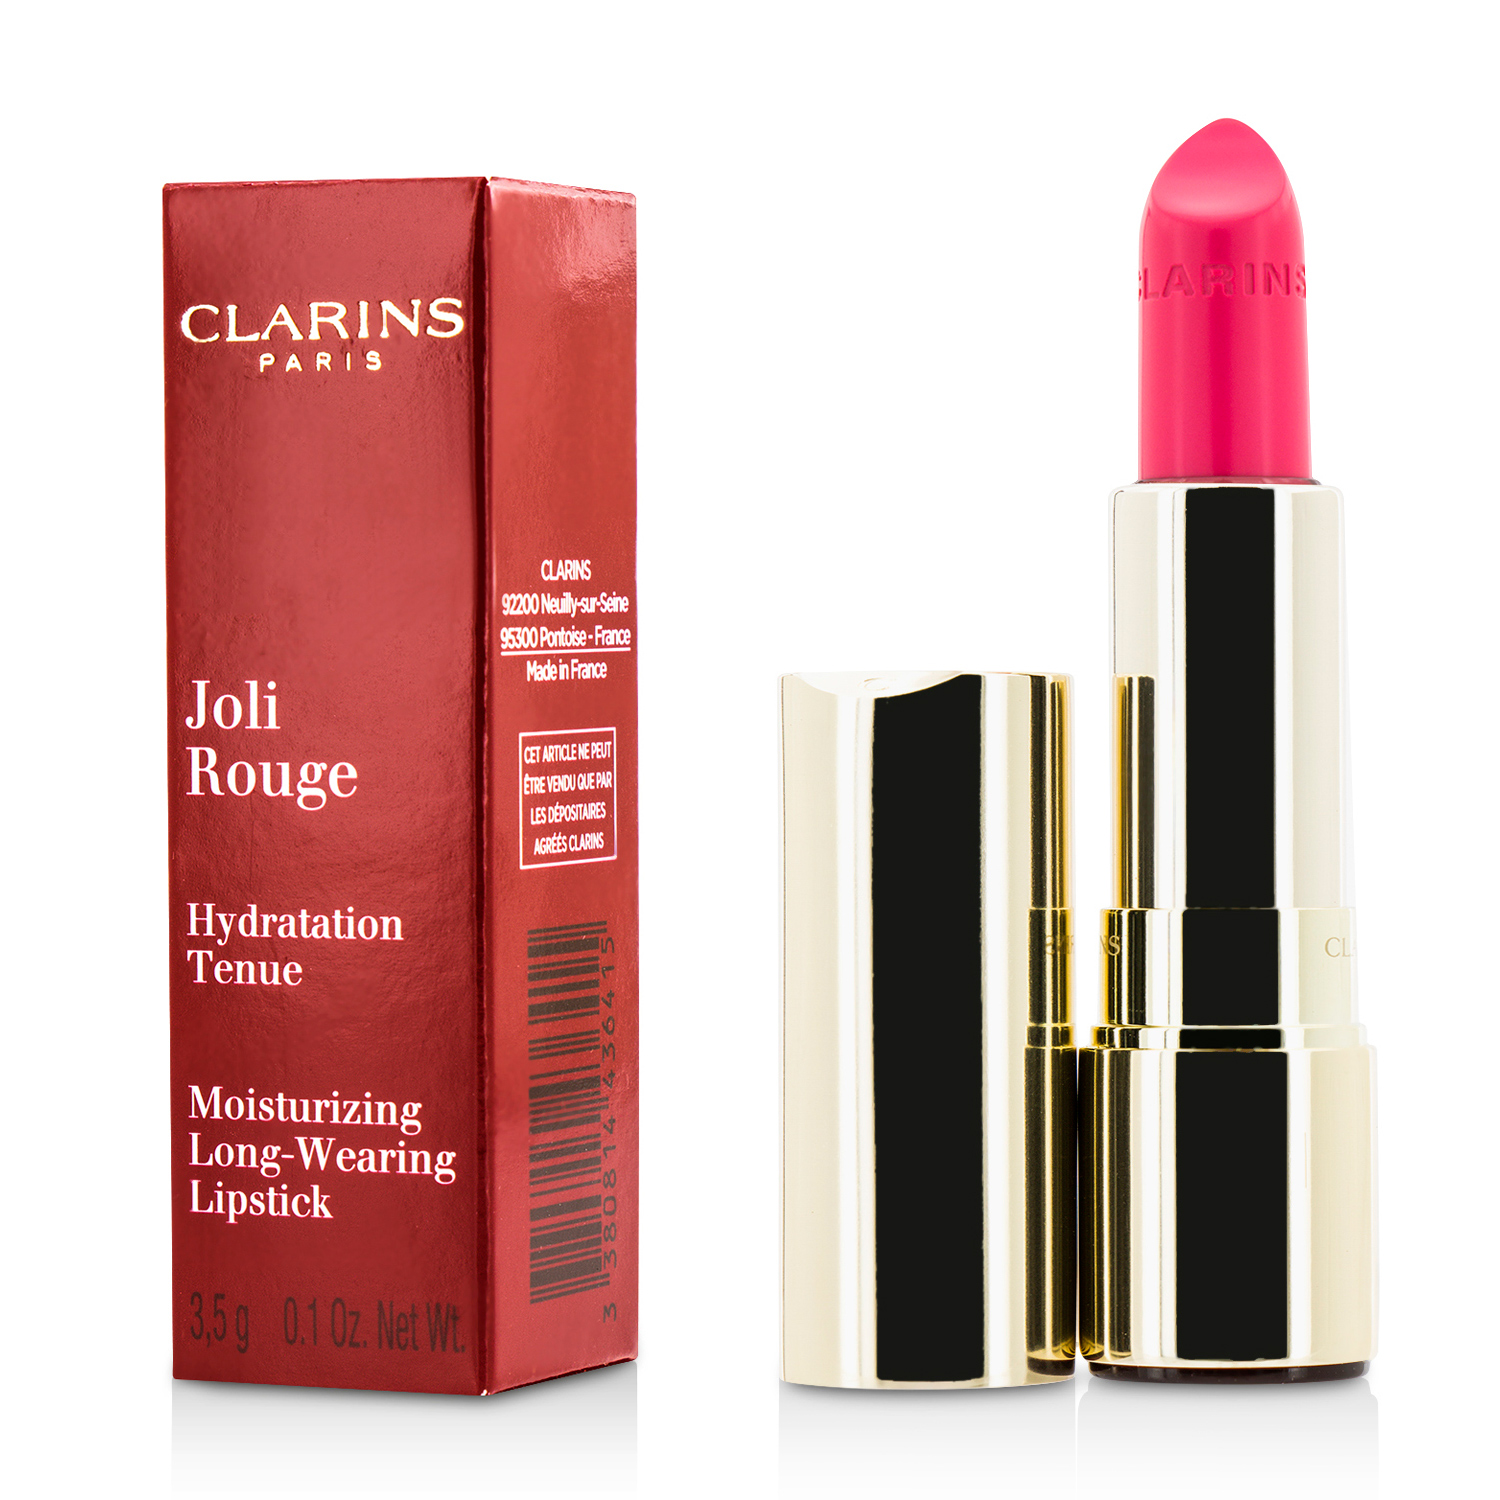 Joli Rouge (Long Wearing Moisturizing Lipstick) - # 749 Bubble Gum Pink Clarins Image